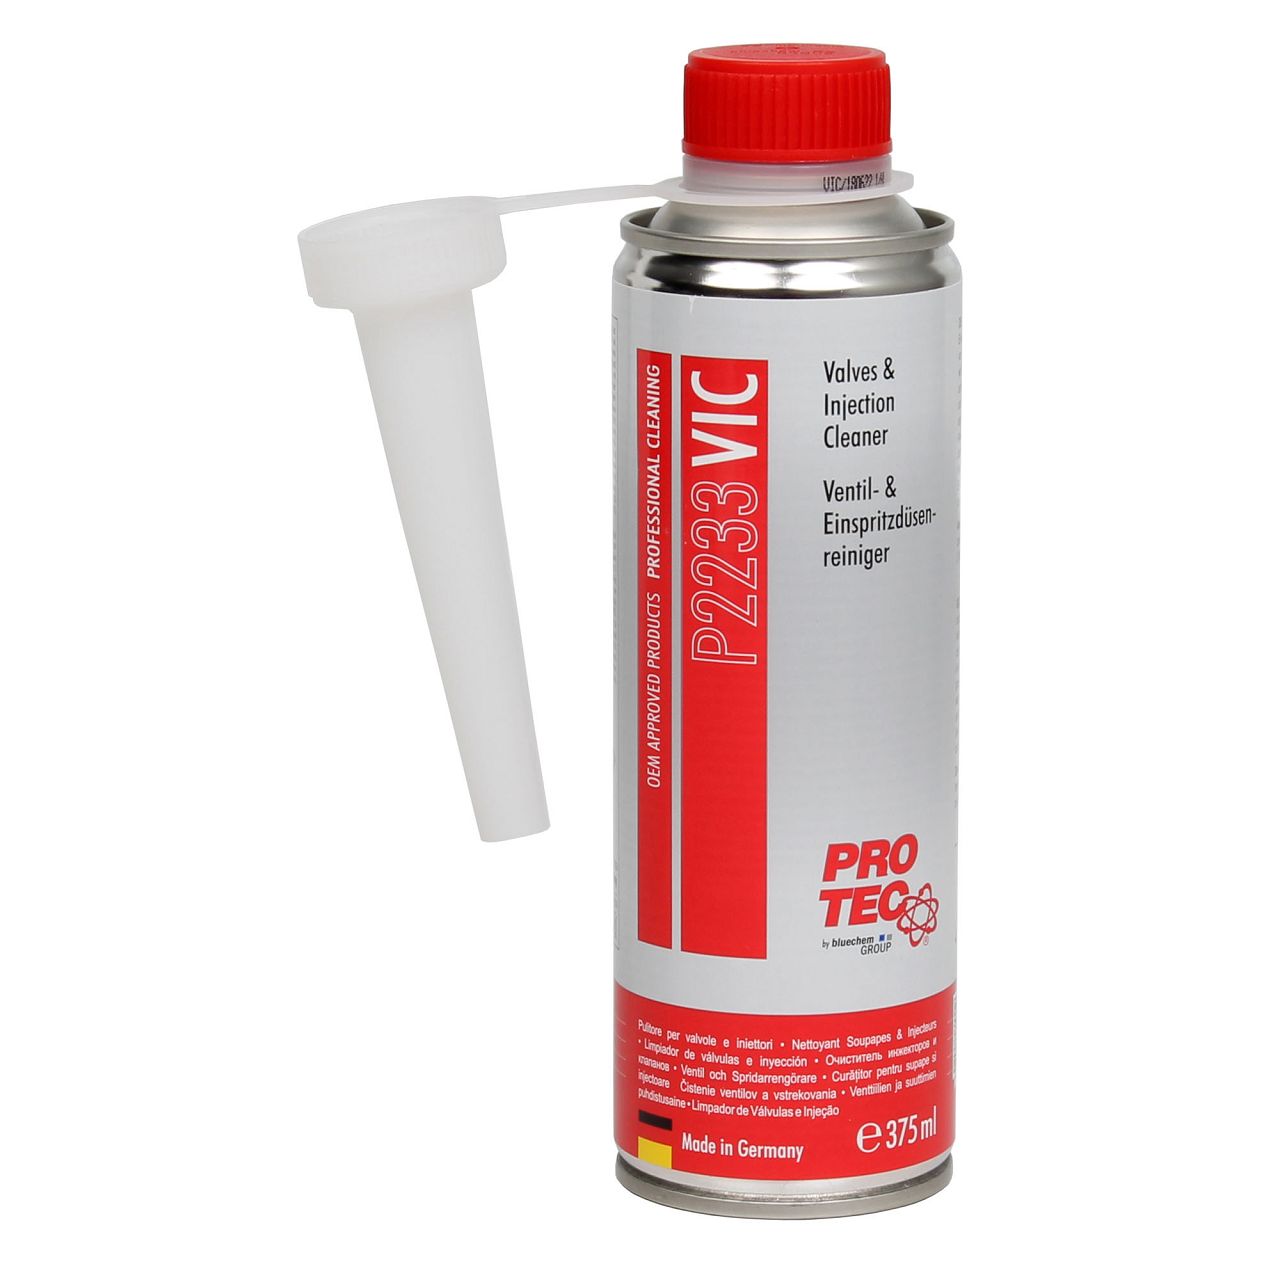 PROTEC VIC Valves & Injection Cleaner Ventil- & Einspritzdüsenreiniger 375ml